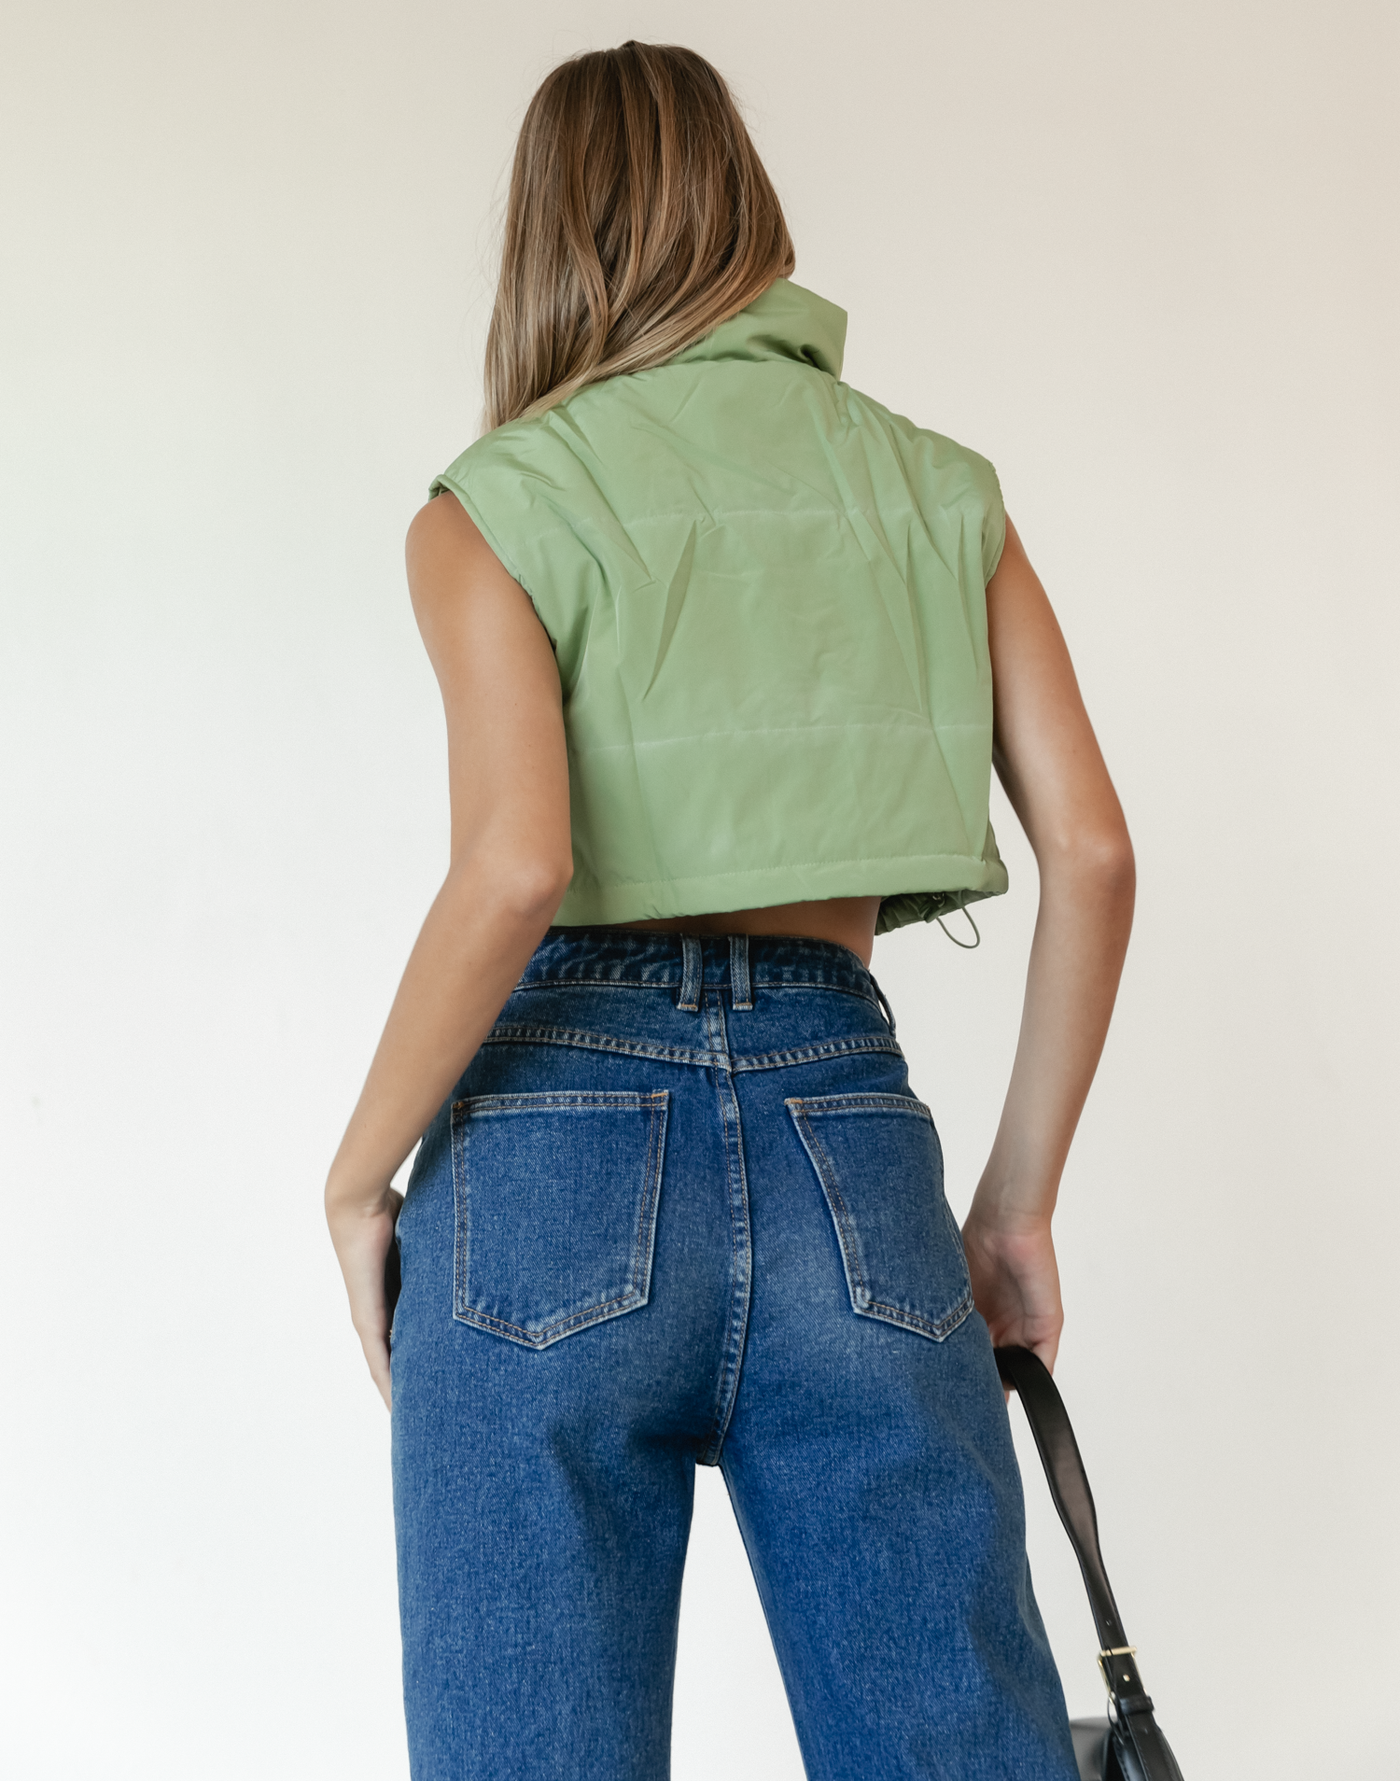 Mullins Puffer Vest (Green) - Green Puffer Vest - Women's Outerwear - Charcoal Clothing